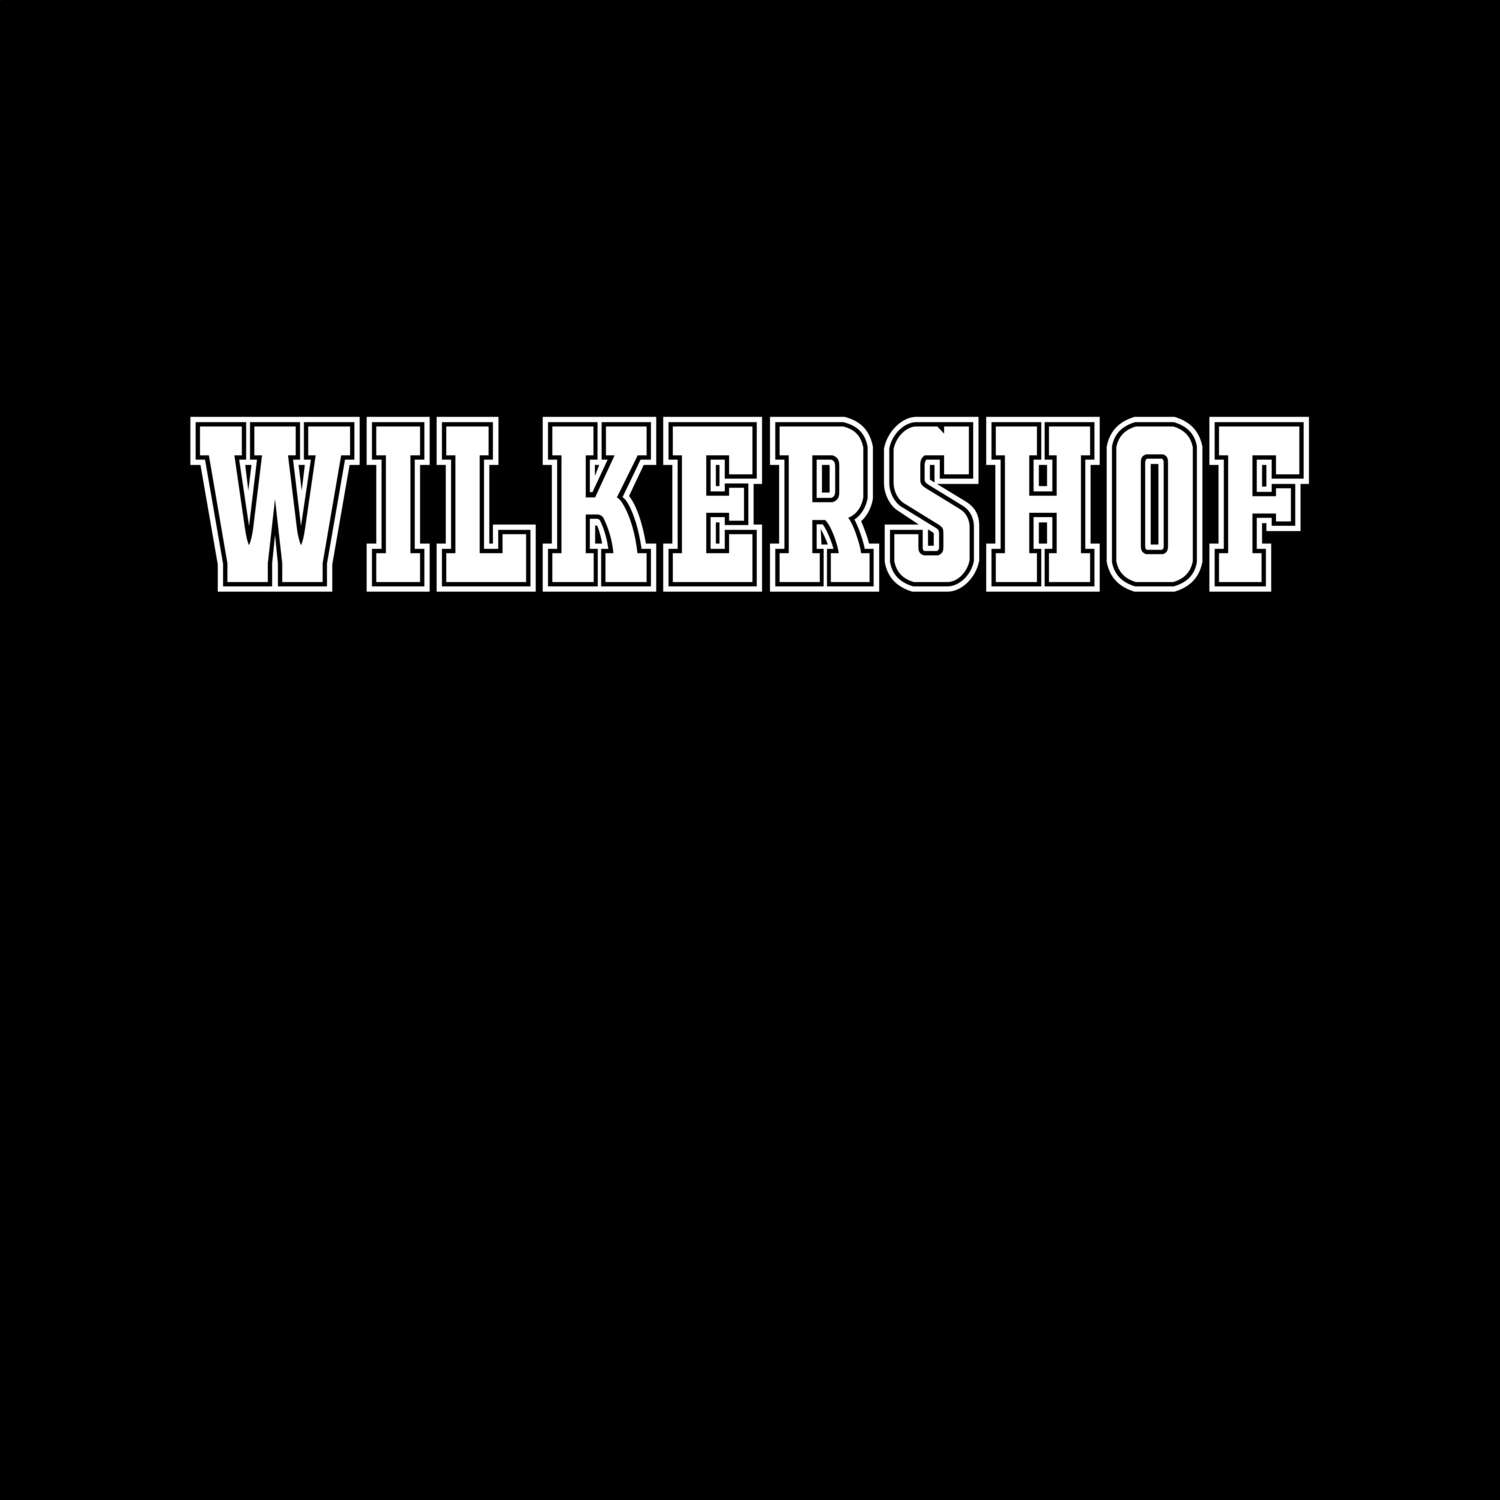 Wilkershof T-Shirt »Classic«